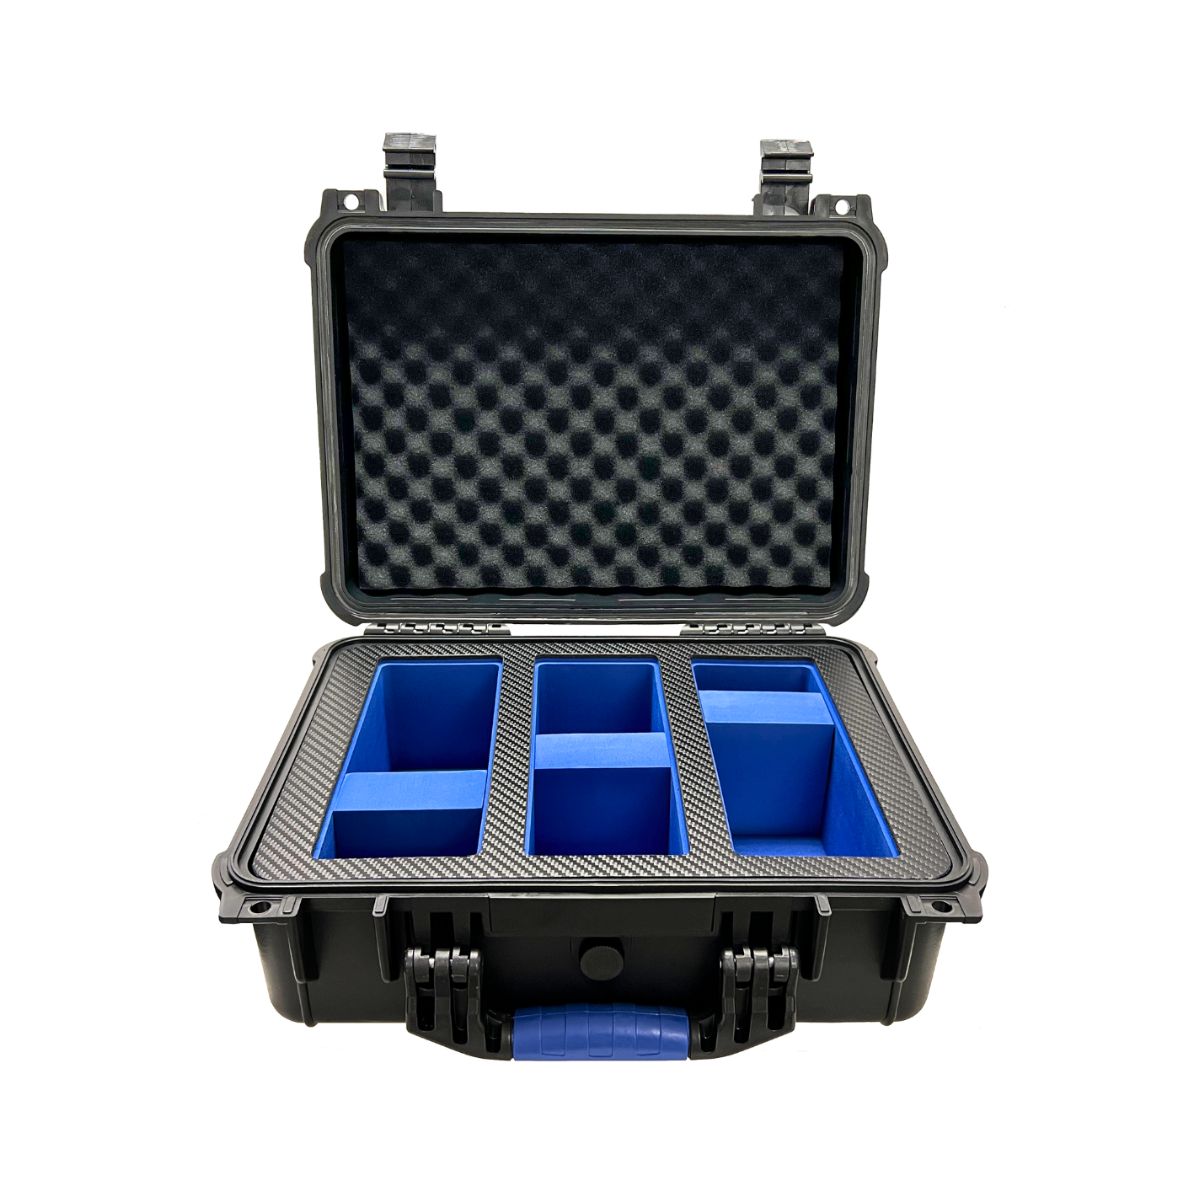 Armortek Z3 Pro Waterproof Slab Case for PSA, SGC, BGS and more!